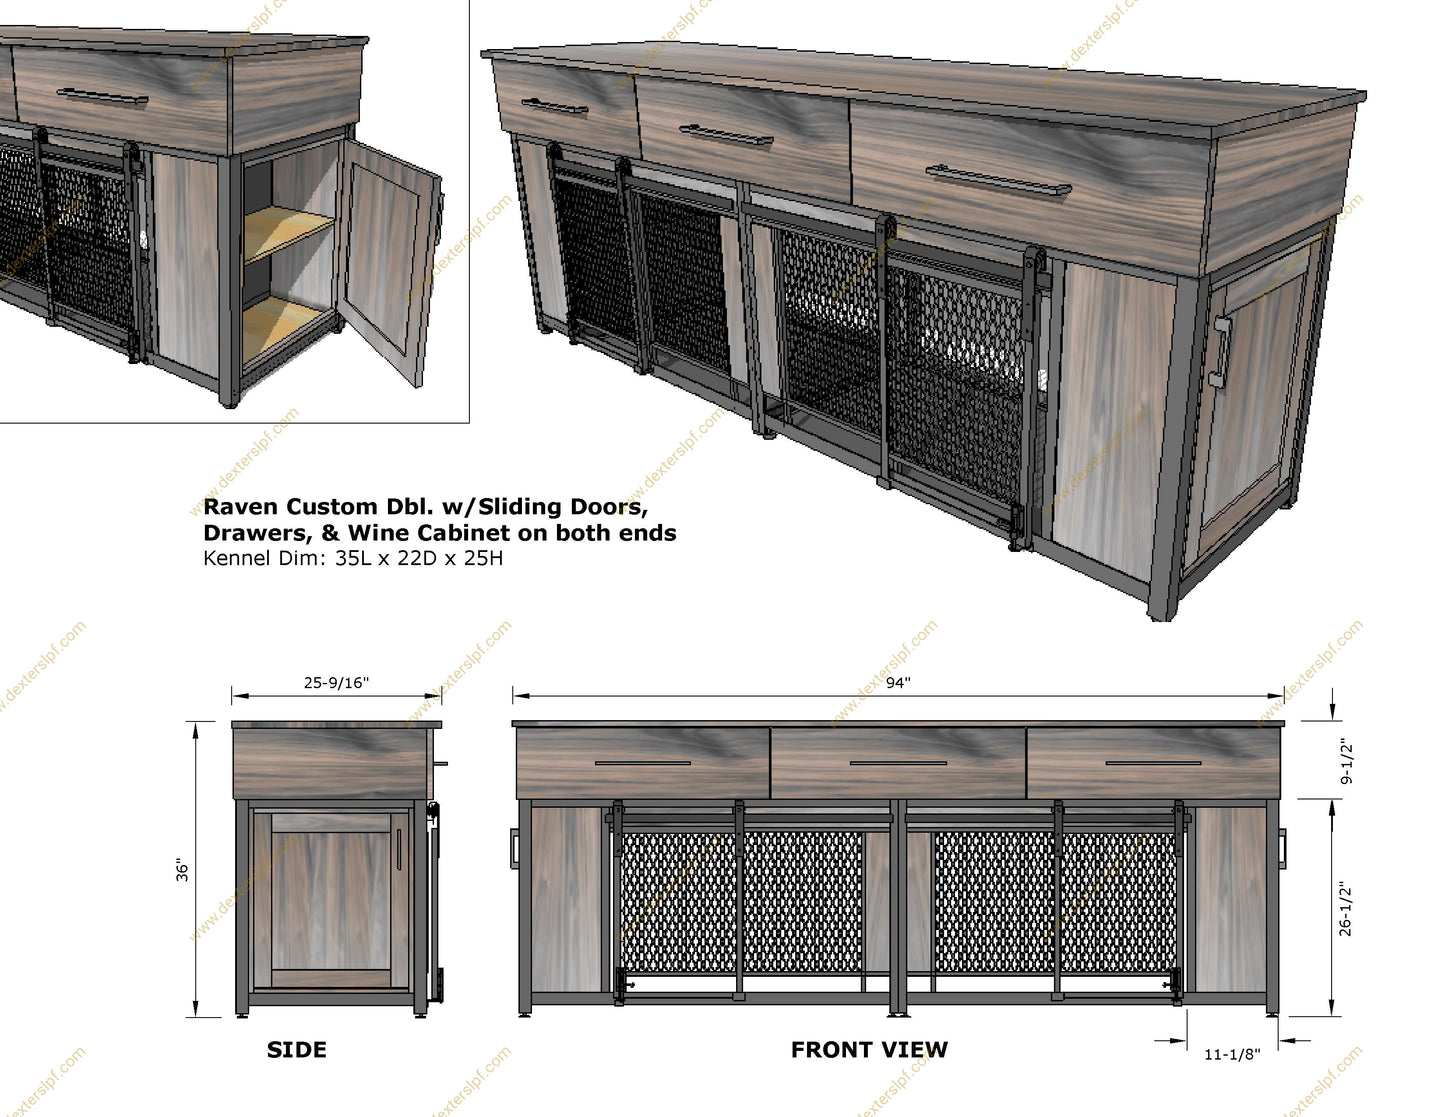 Raven Large Double Dog Kennel, Wine Storage Cabinets, 3 Drawers, Sliding Barn Style Doors